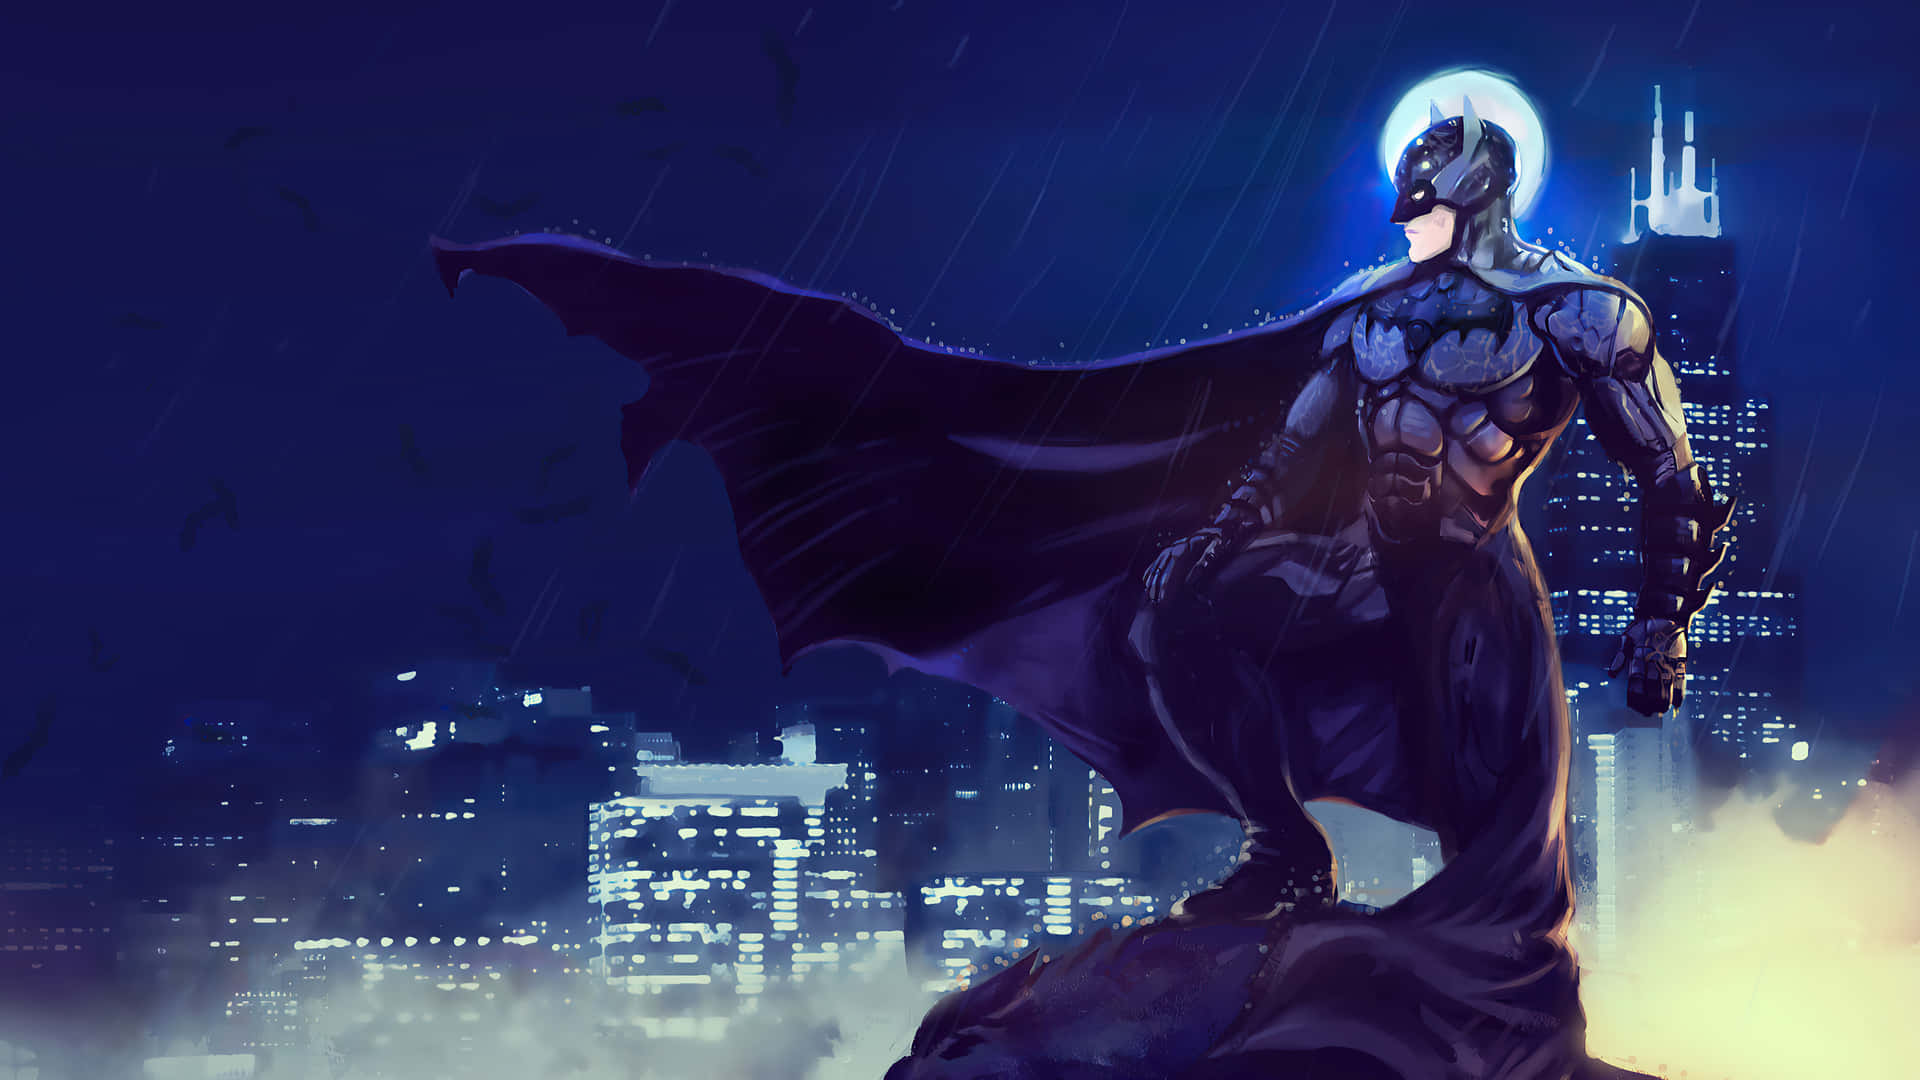 Imposanteskyline Von Batman City Wallpaper